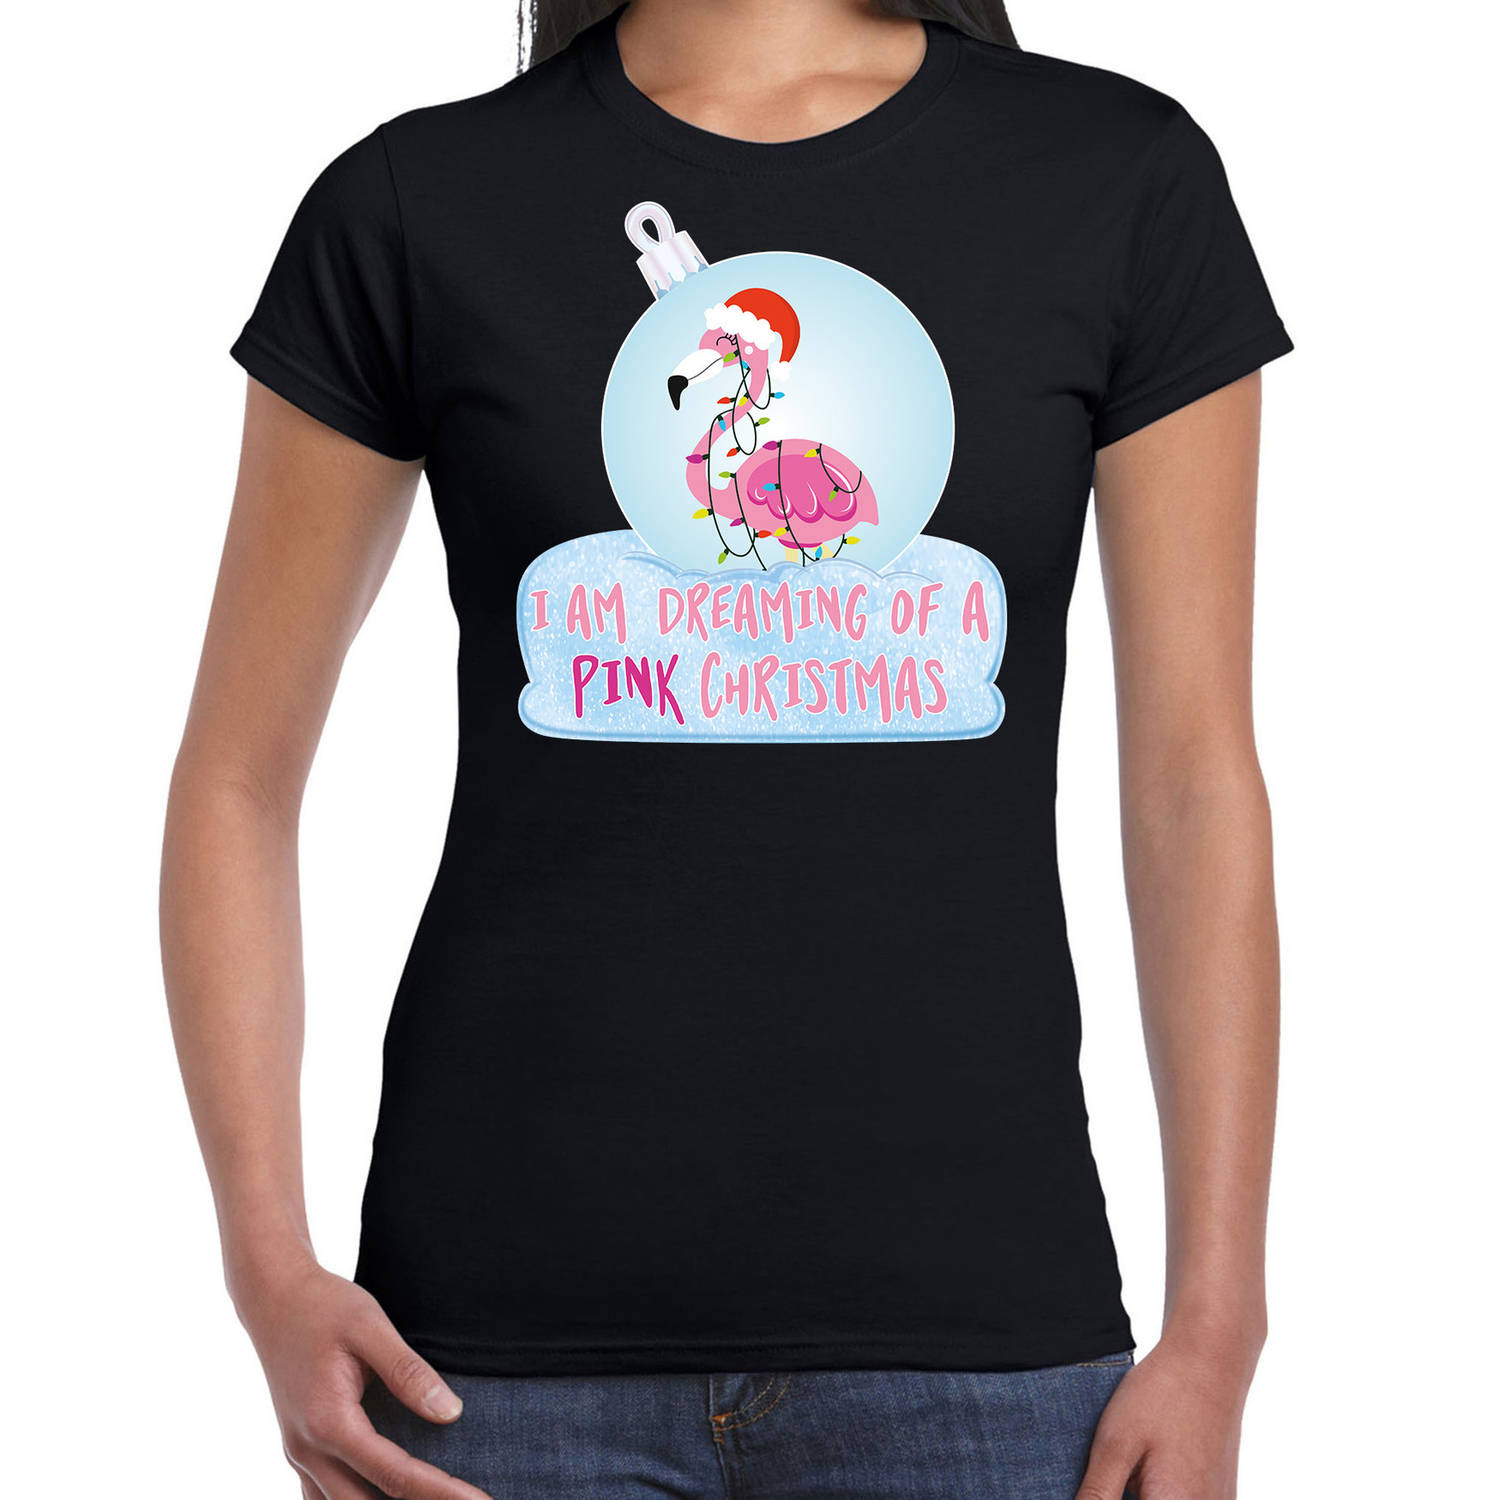 Zwart Kerstshirt / Kerstkleding I am dreaming of a pink Christmas voor dames met flamingo kerstbal L - kerst t-shirts